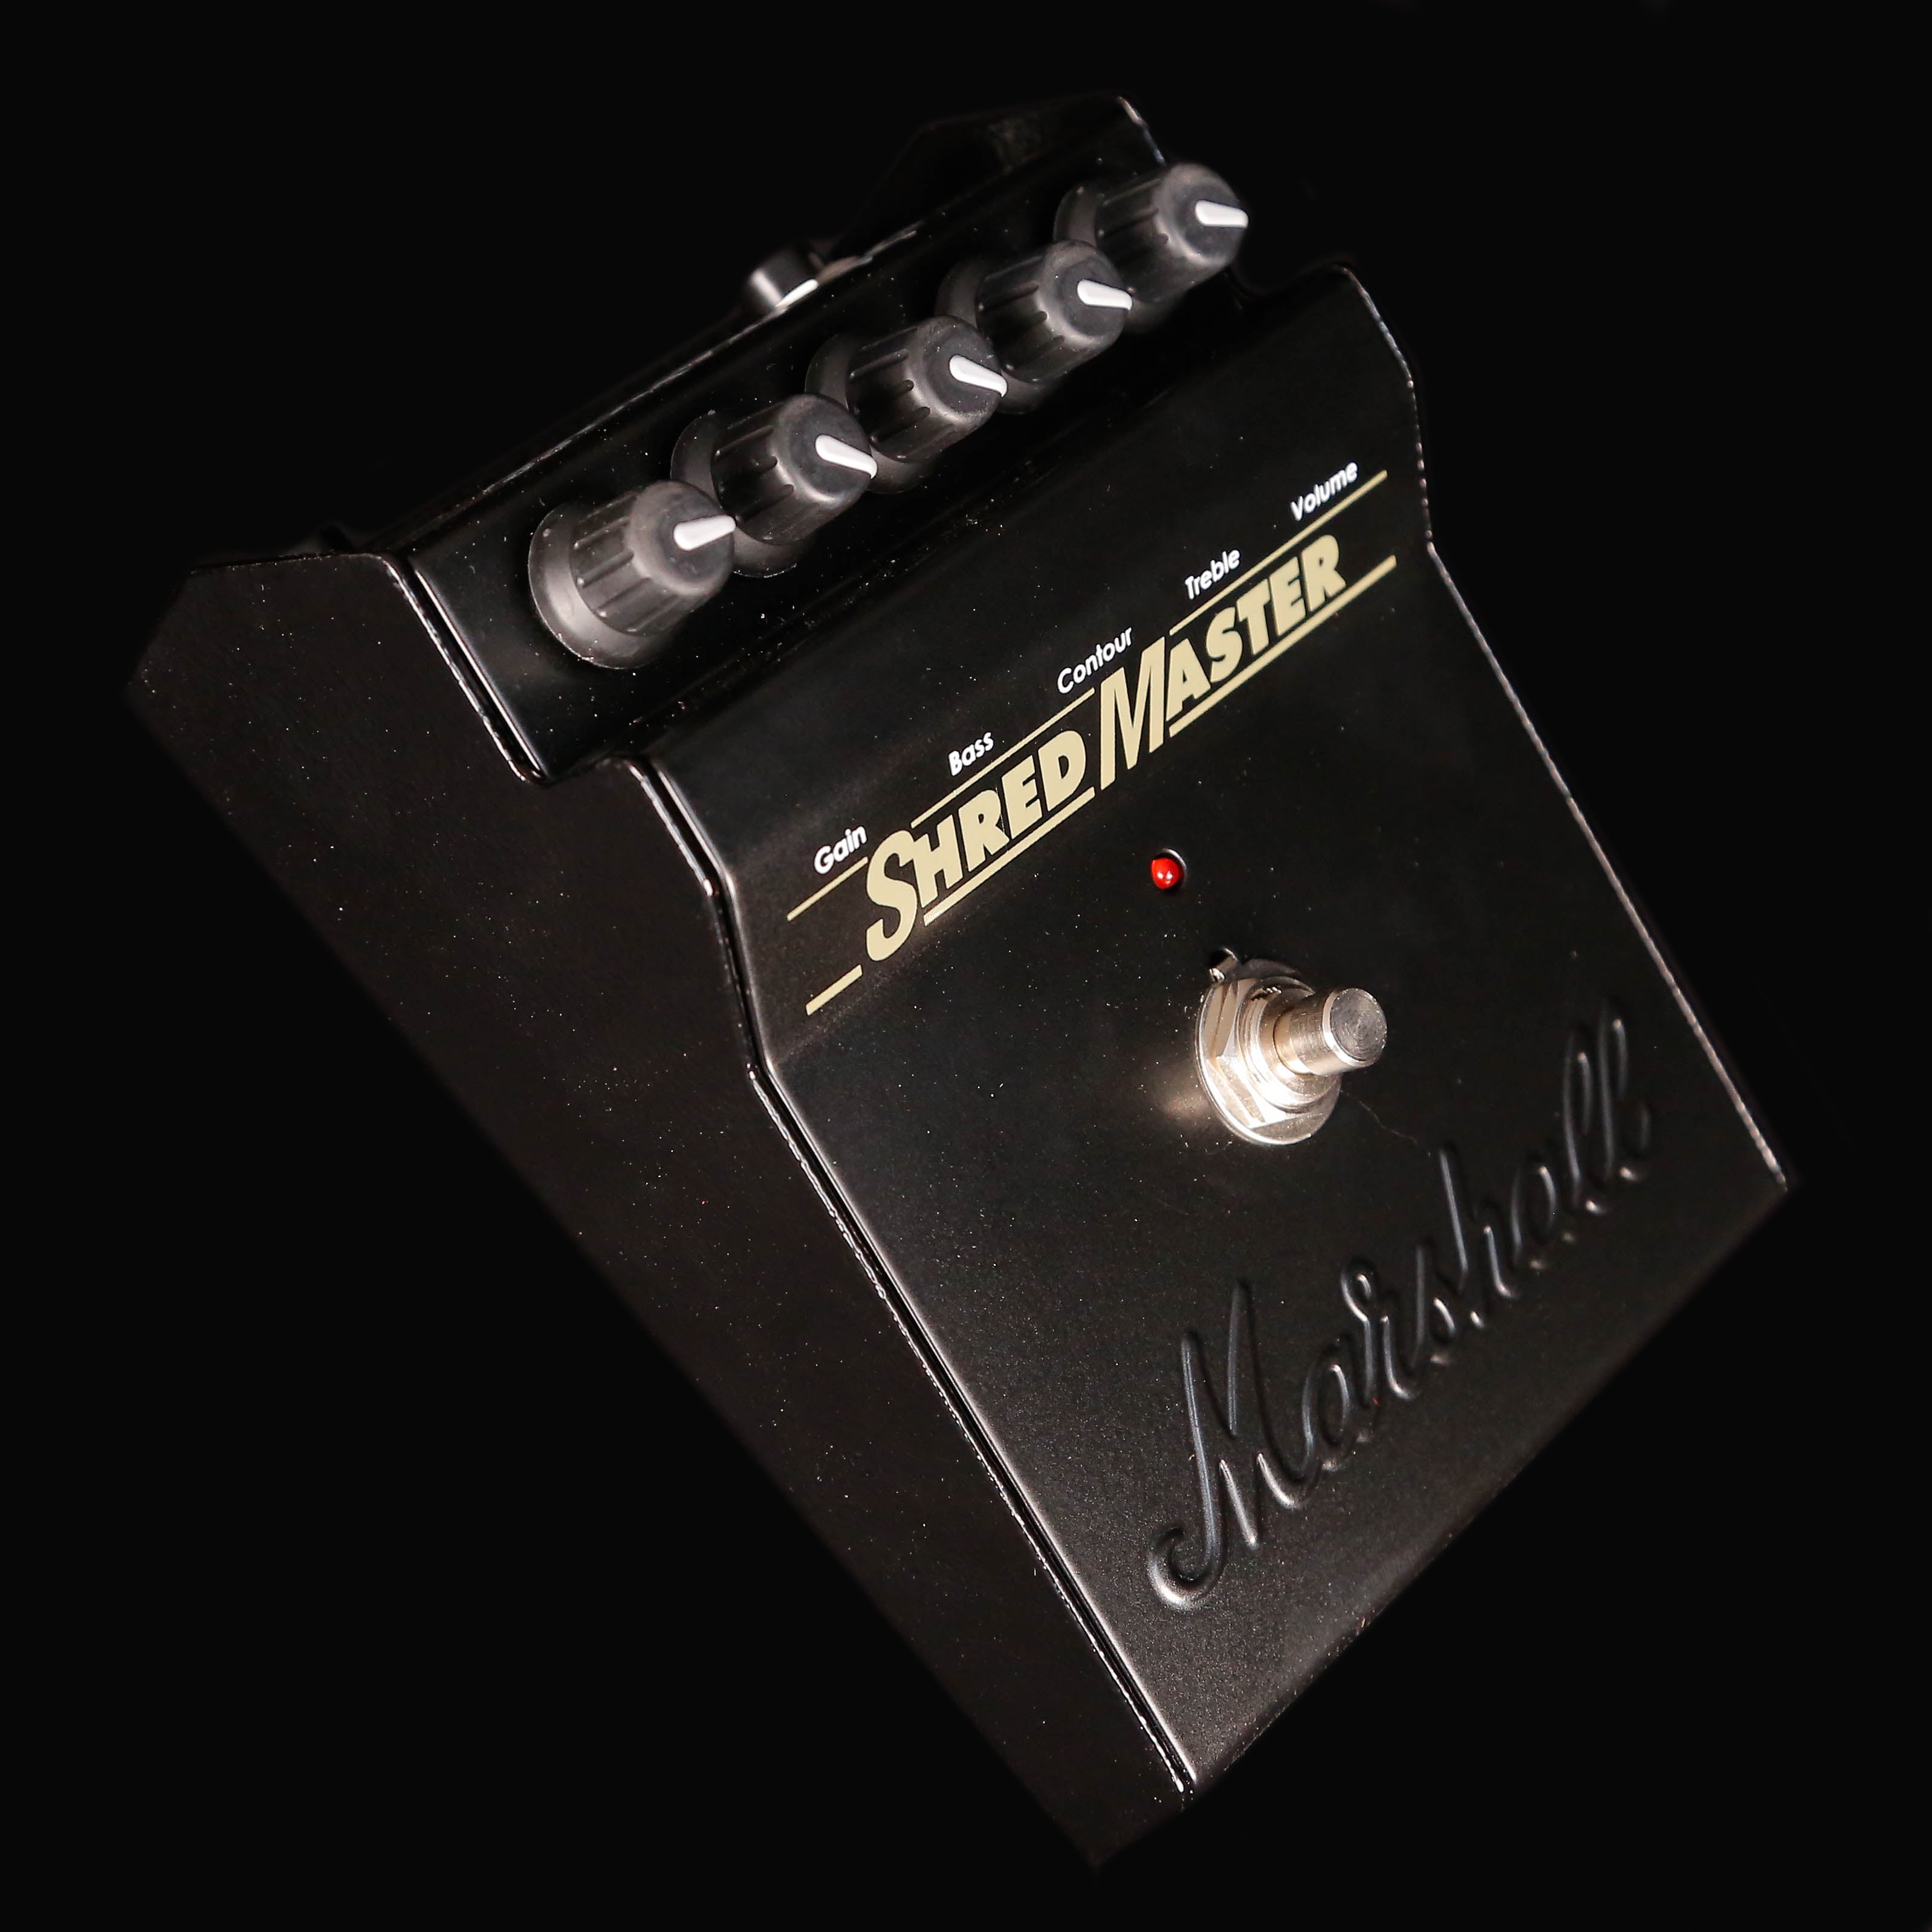 Marshall ShredMaster Overdrive/Distortion Pedal, Vintage Reissue